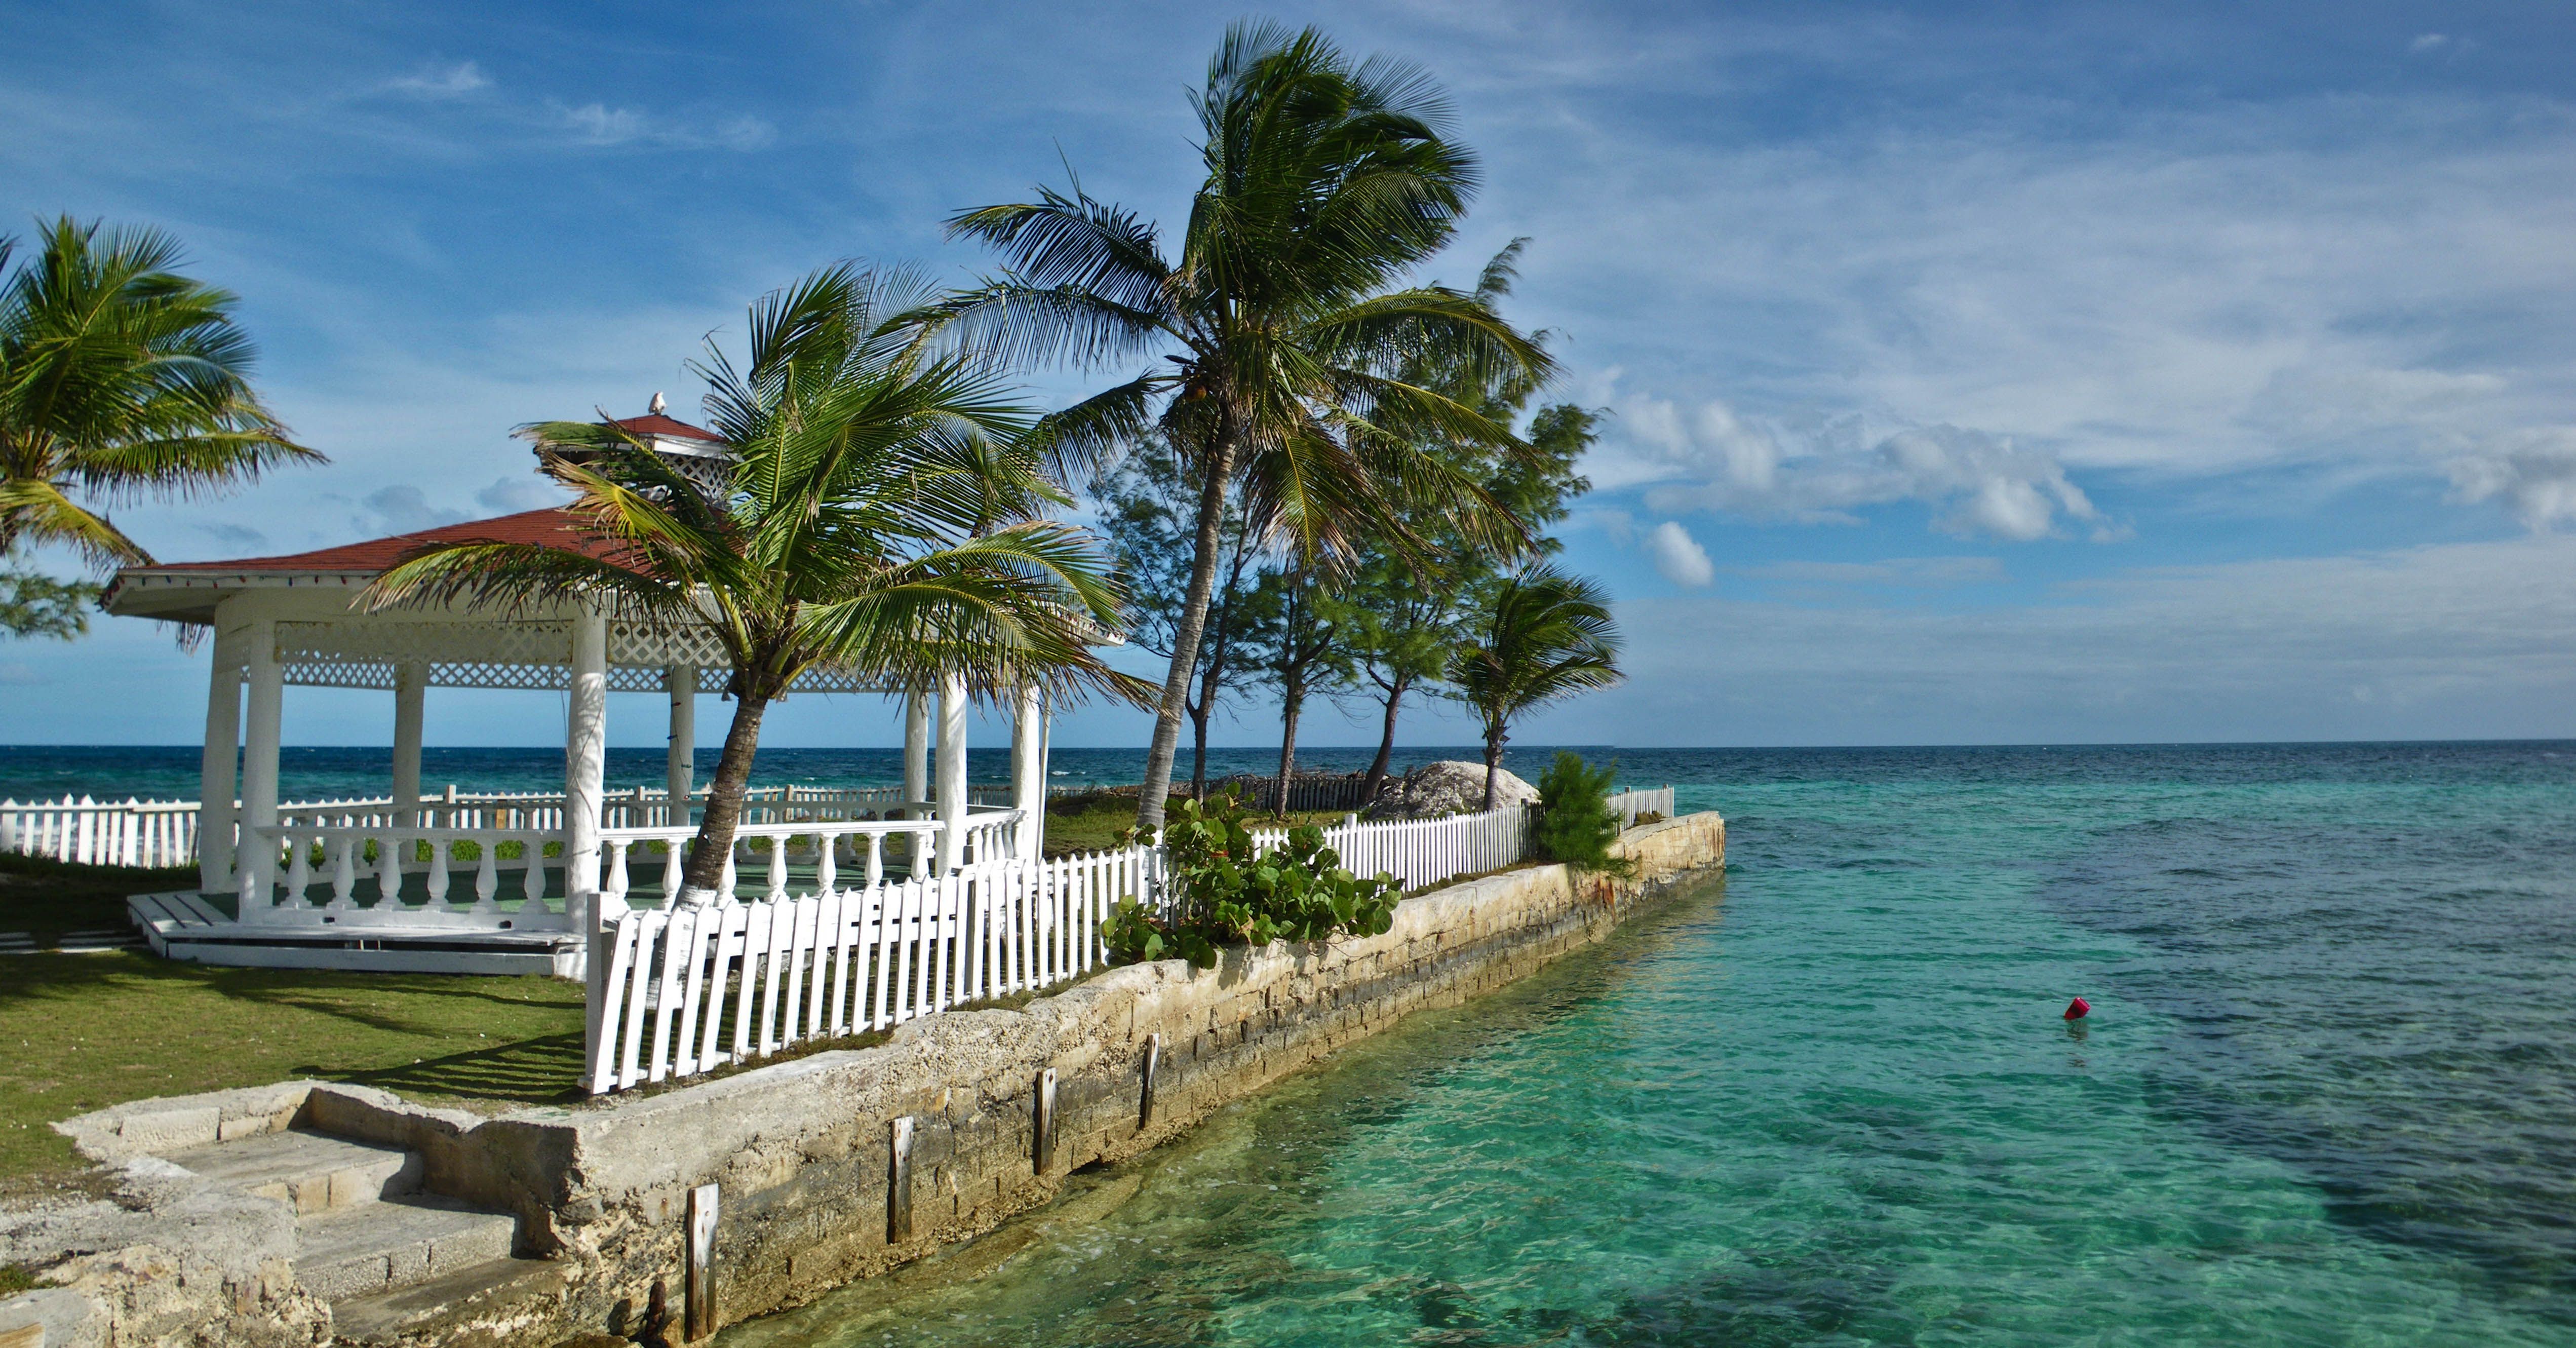 Danish companies linked to new Bahamas leak